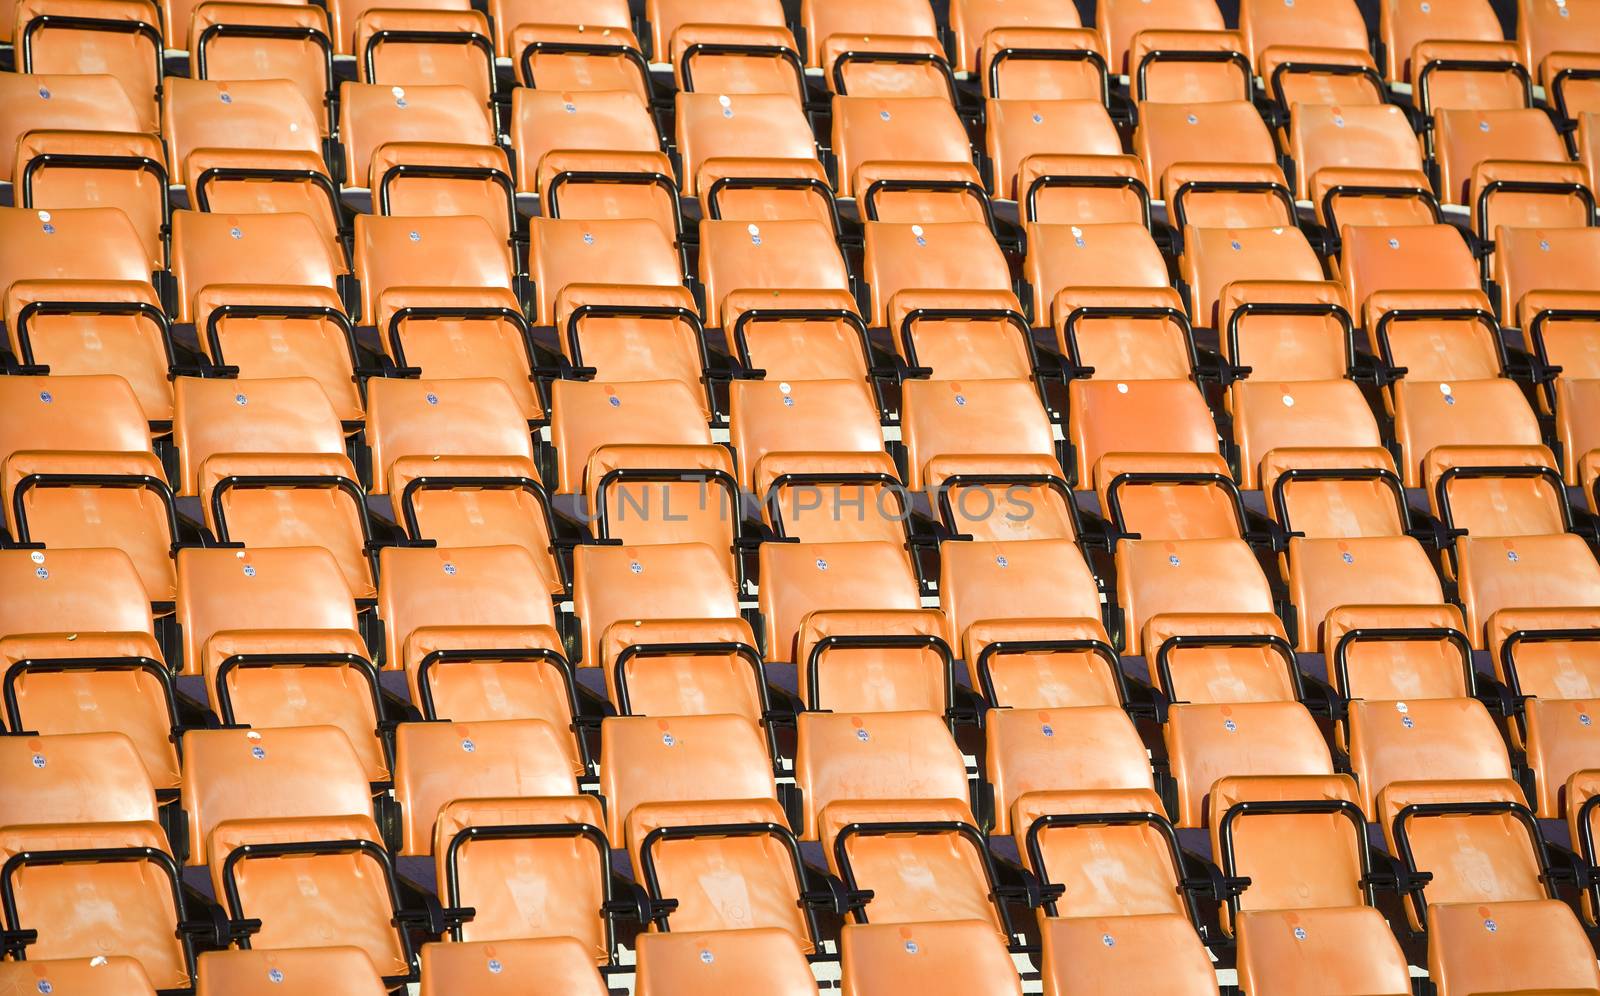 Spectators seats at a stadium by gemenacom